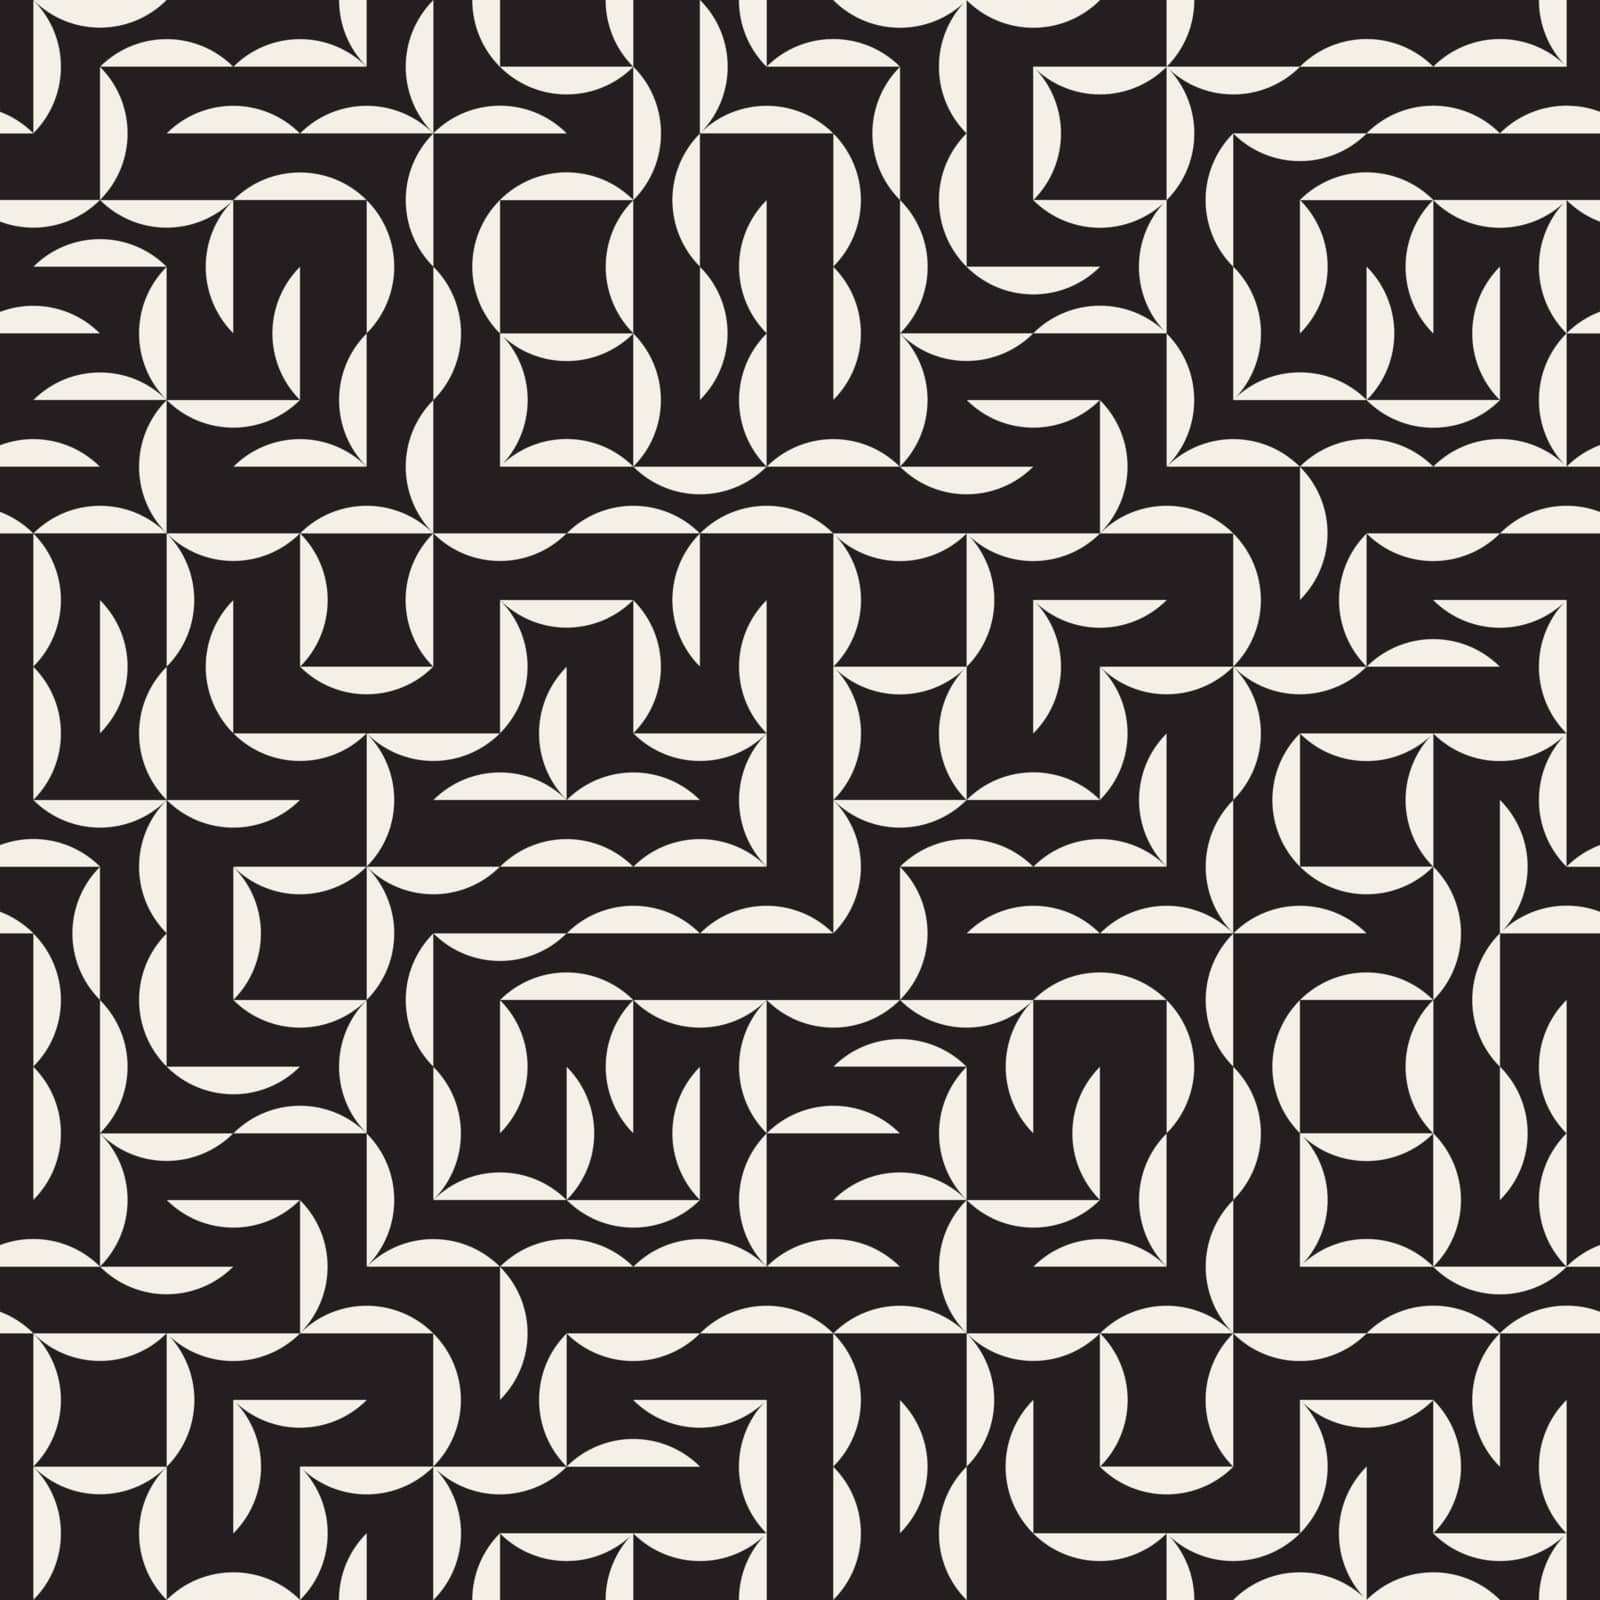 Vector Seamless Black and White Irregular Arc Grid Geometric Pattern by Samolevsky